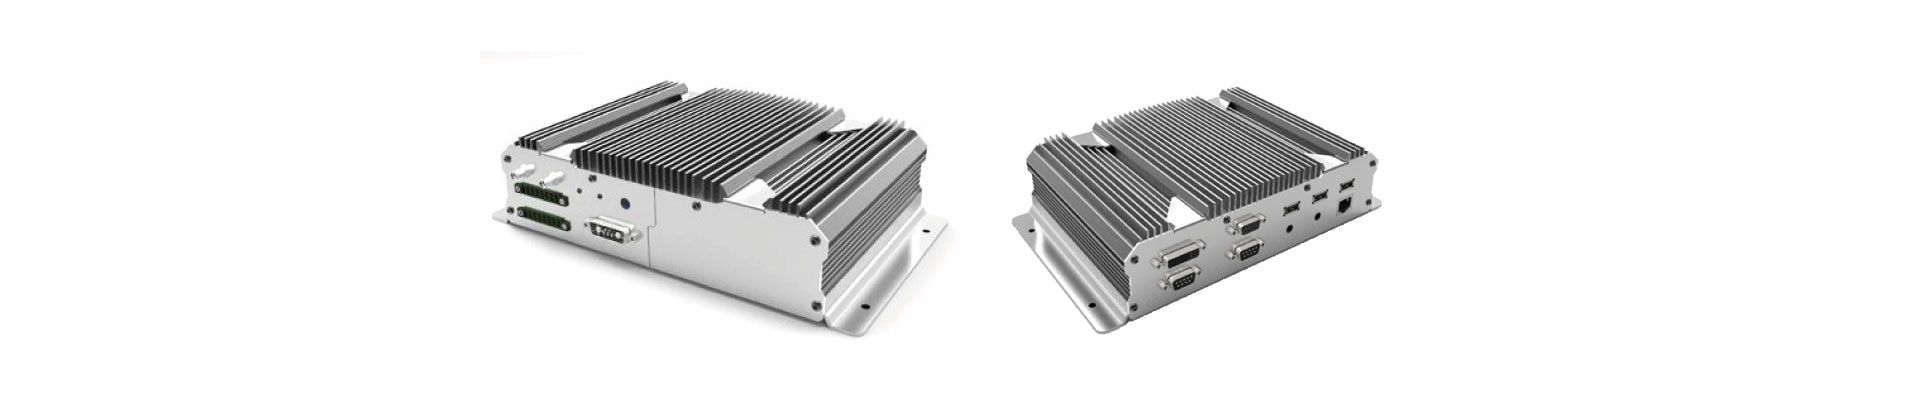 TPC2000 Industrielle Fabrikautomation robuste Box PC Industrie Werkzeugmaschinenbau - Inelmatic